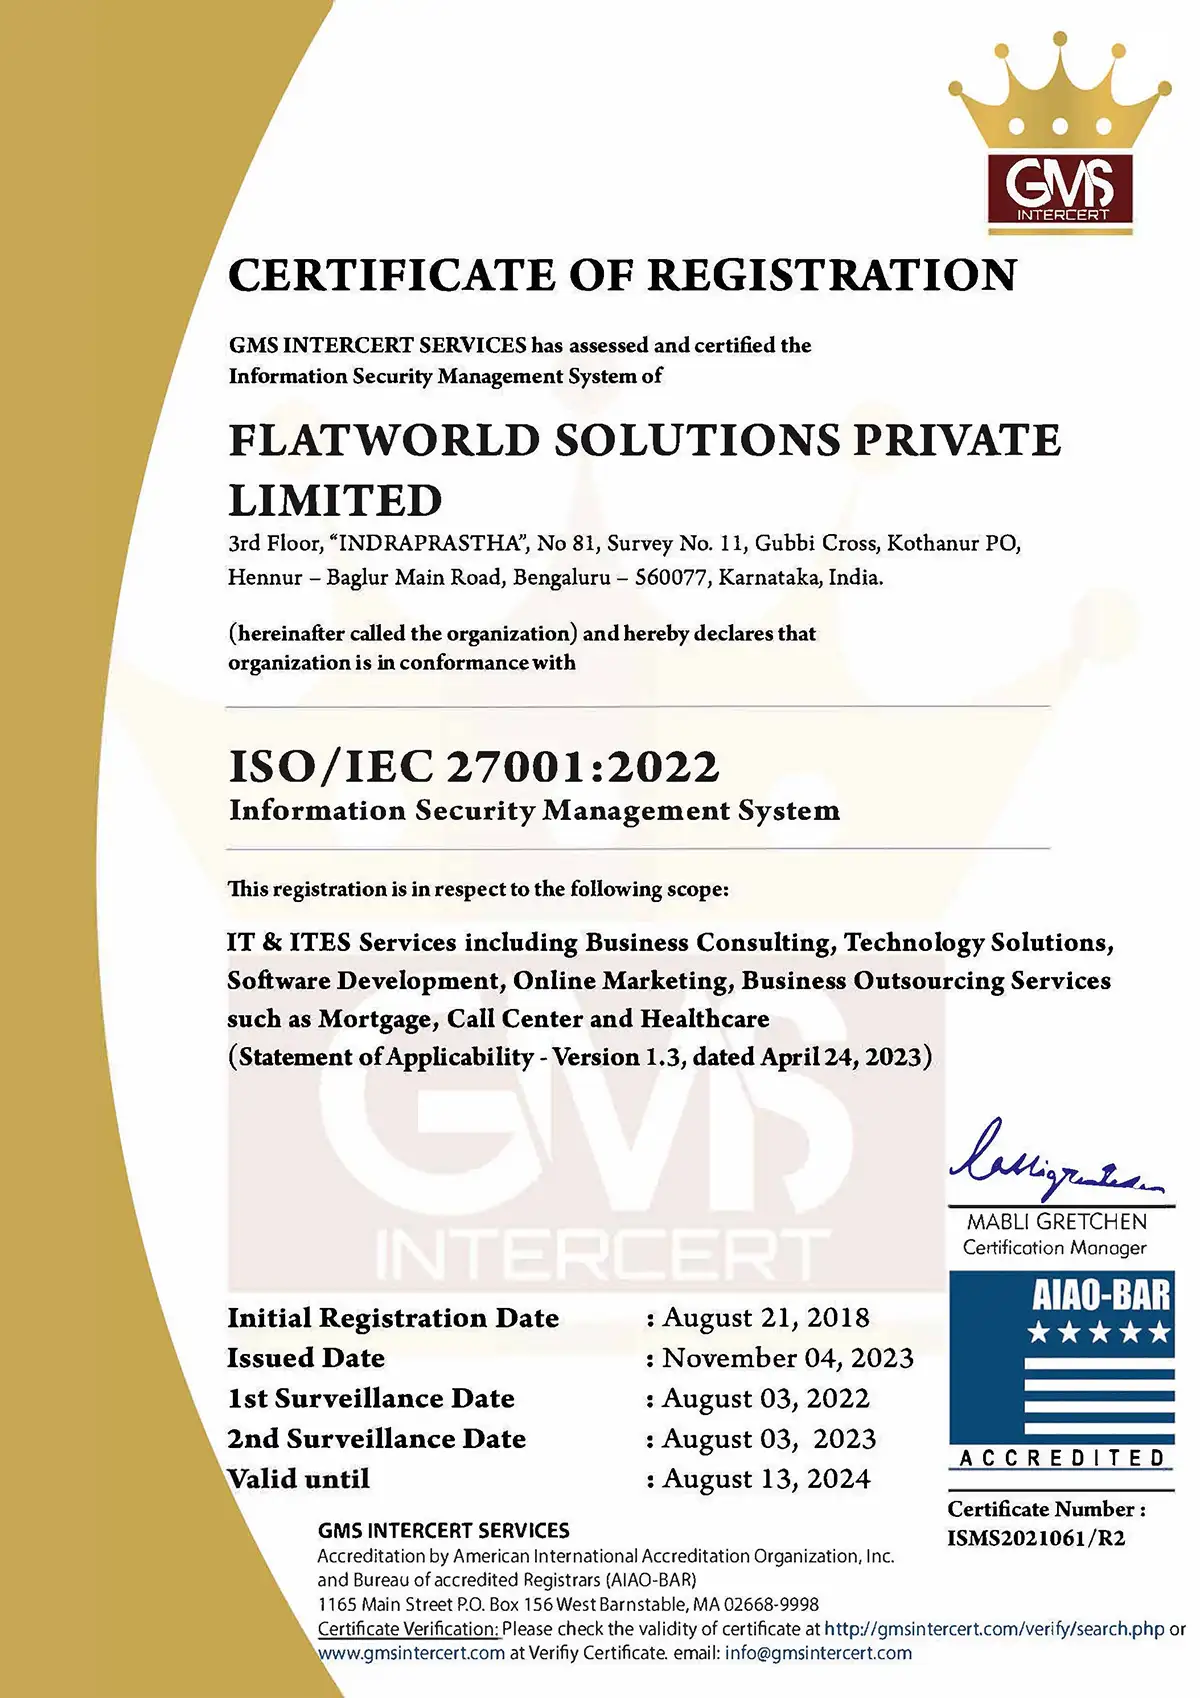 ISO/IEC 27001:2022 certificate